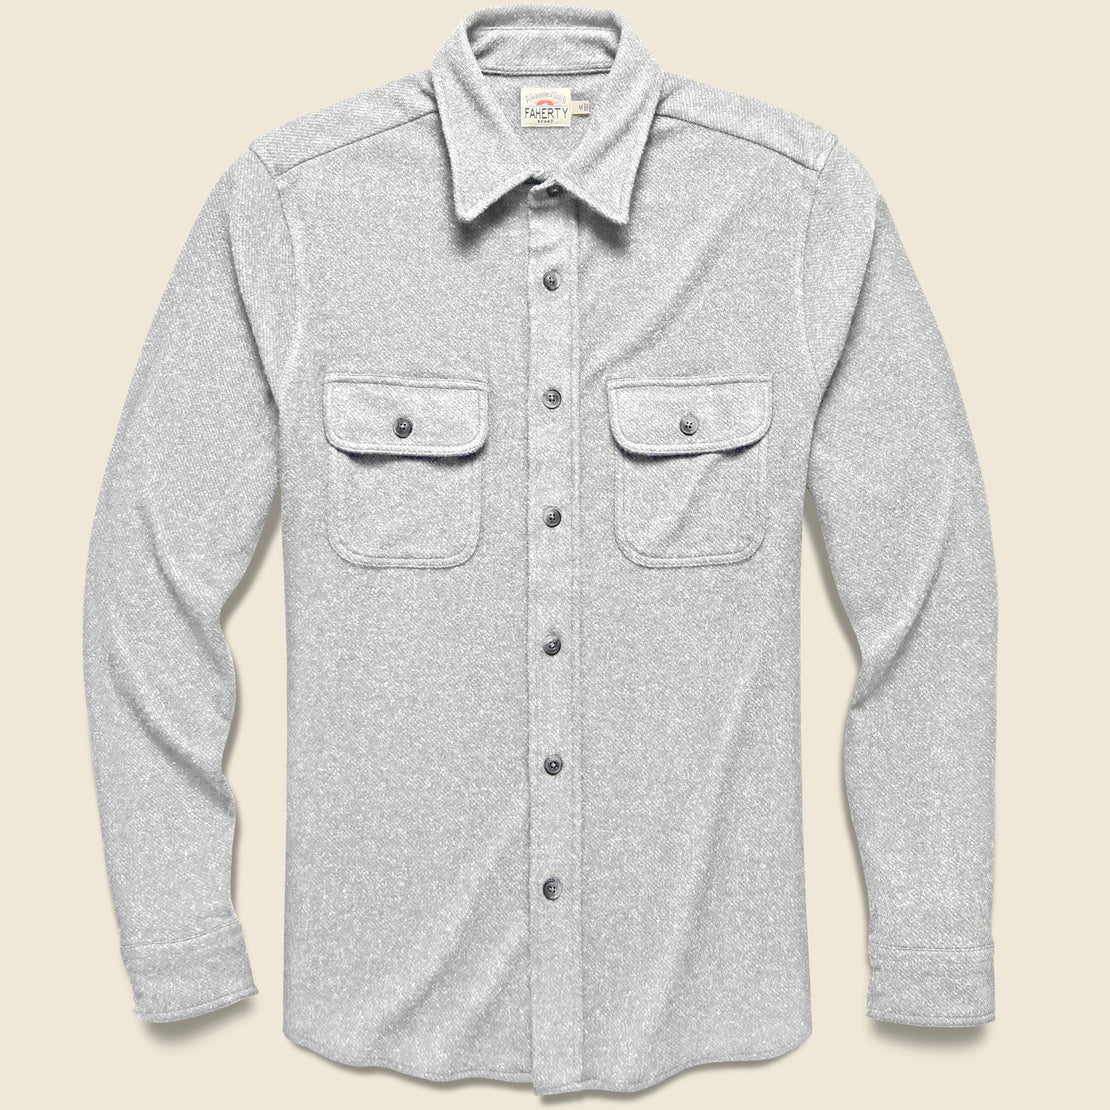 Faherty Legend Sweater Shirt - Fossil Grey Twill